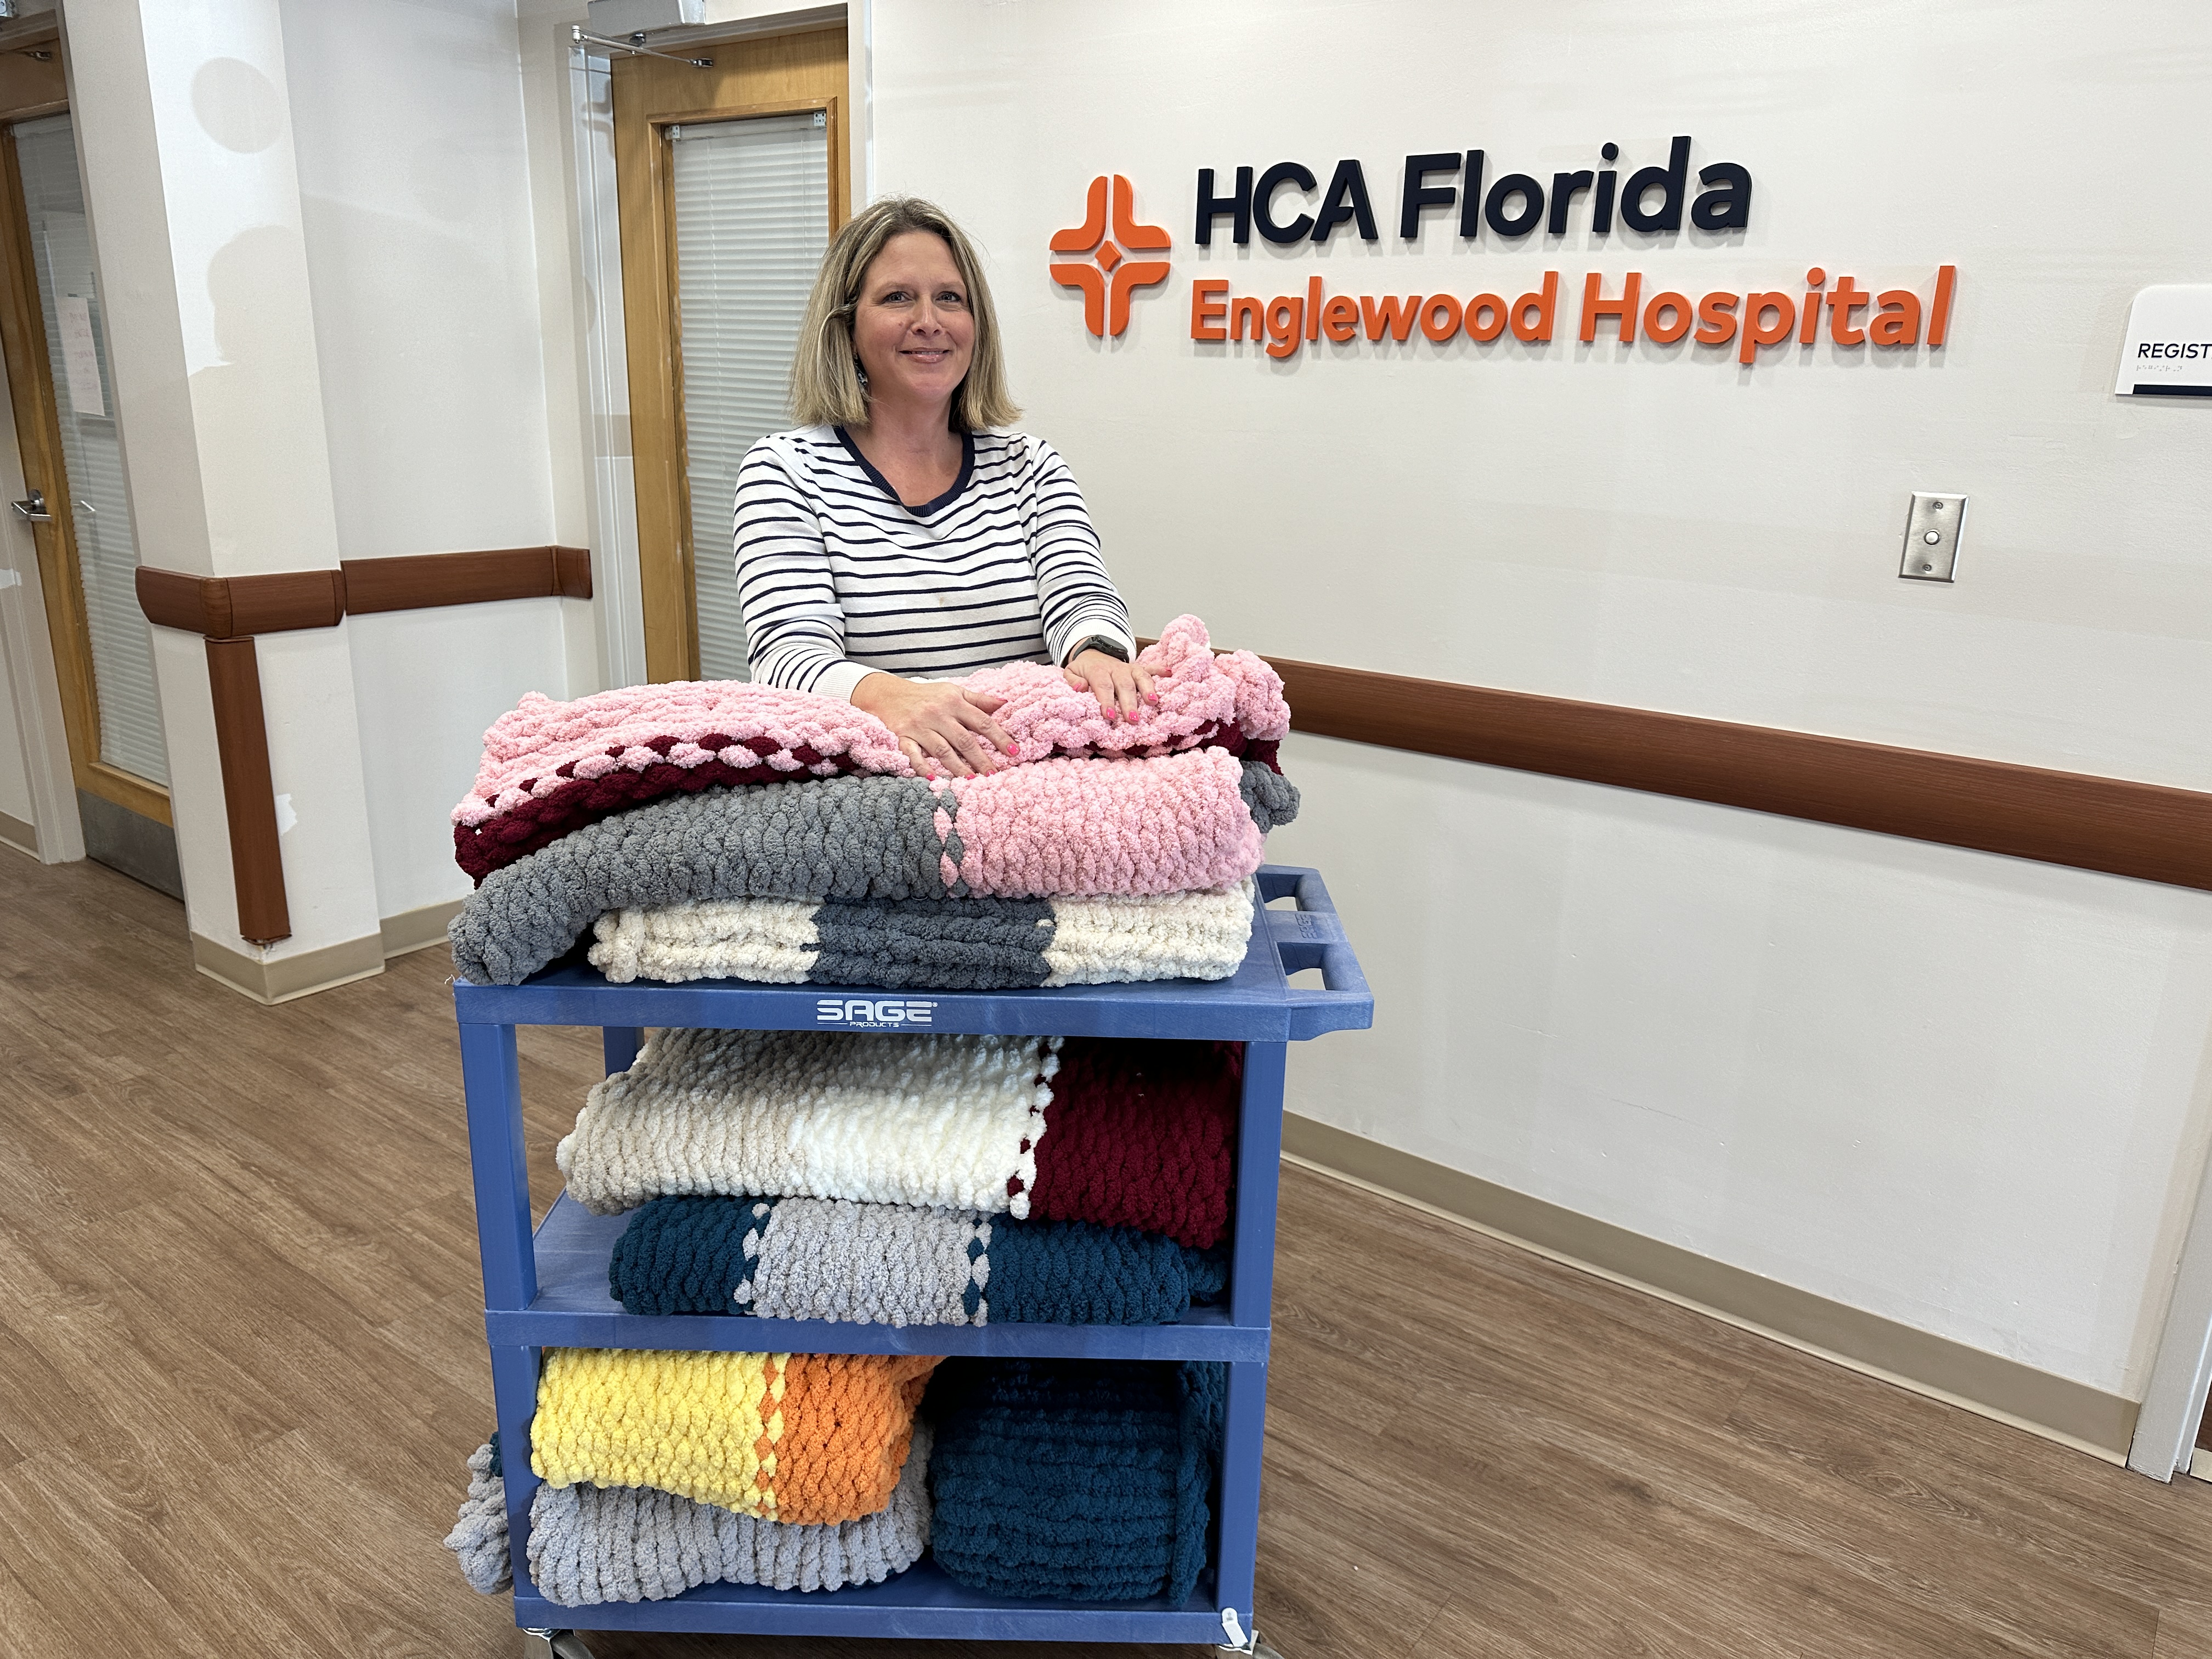 Angela Thomas shared handmade blankets with patients at HCA Florida Englewood Hospital.